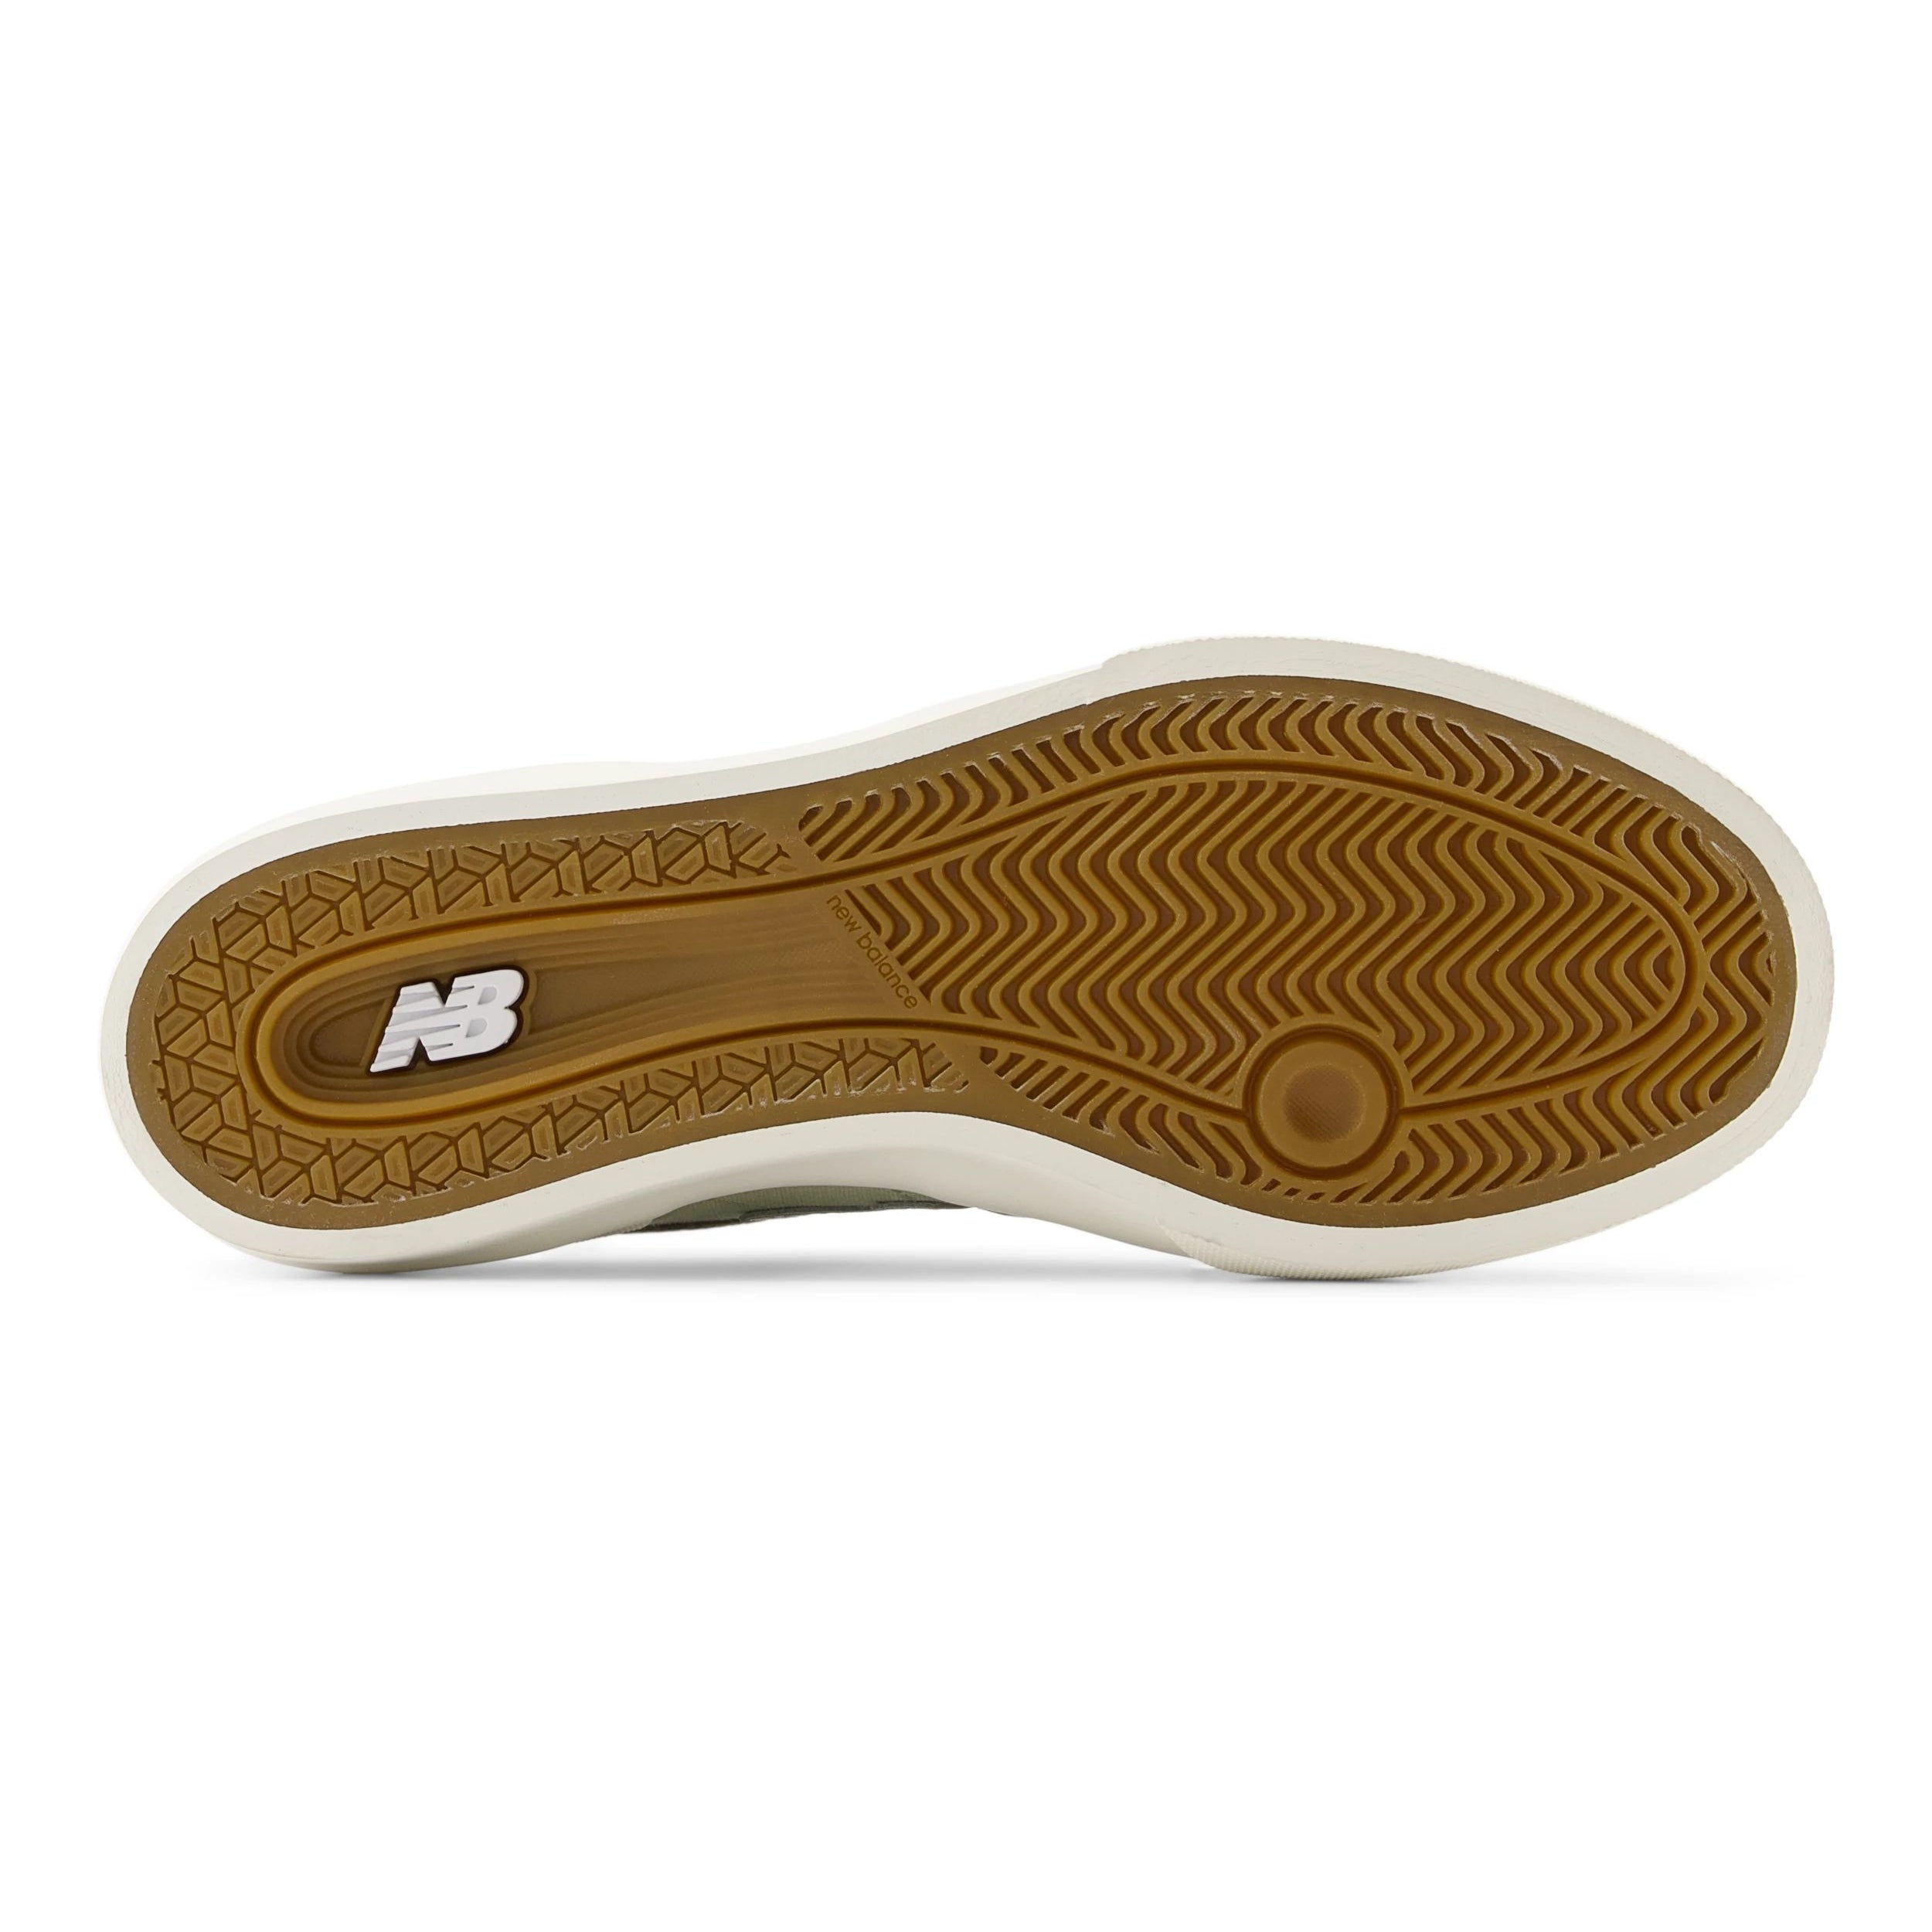 Light Olive NM272 NB Numeric Skate Shoe Bottom